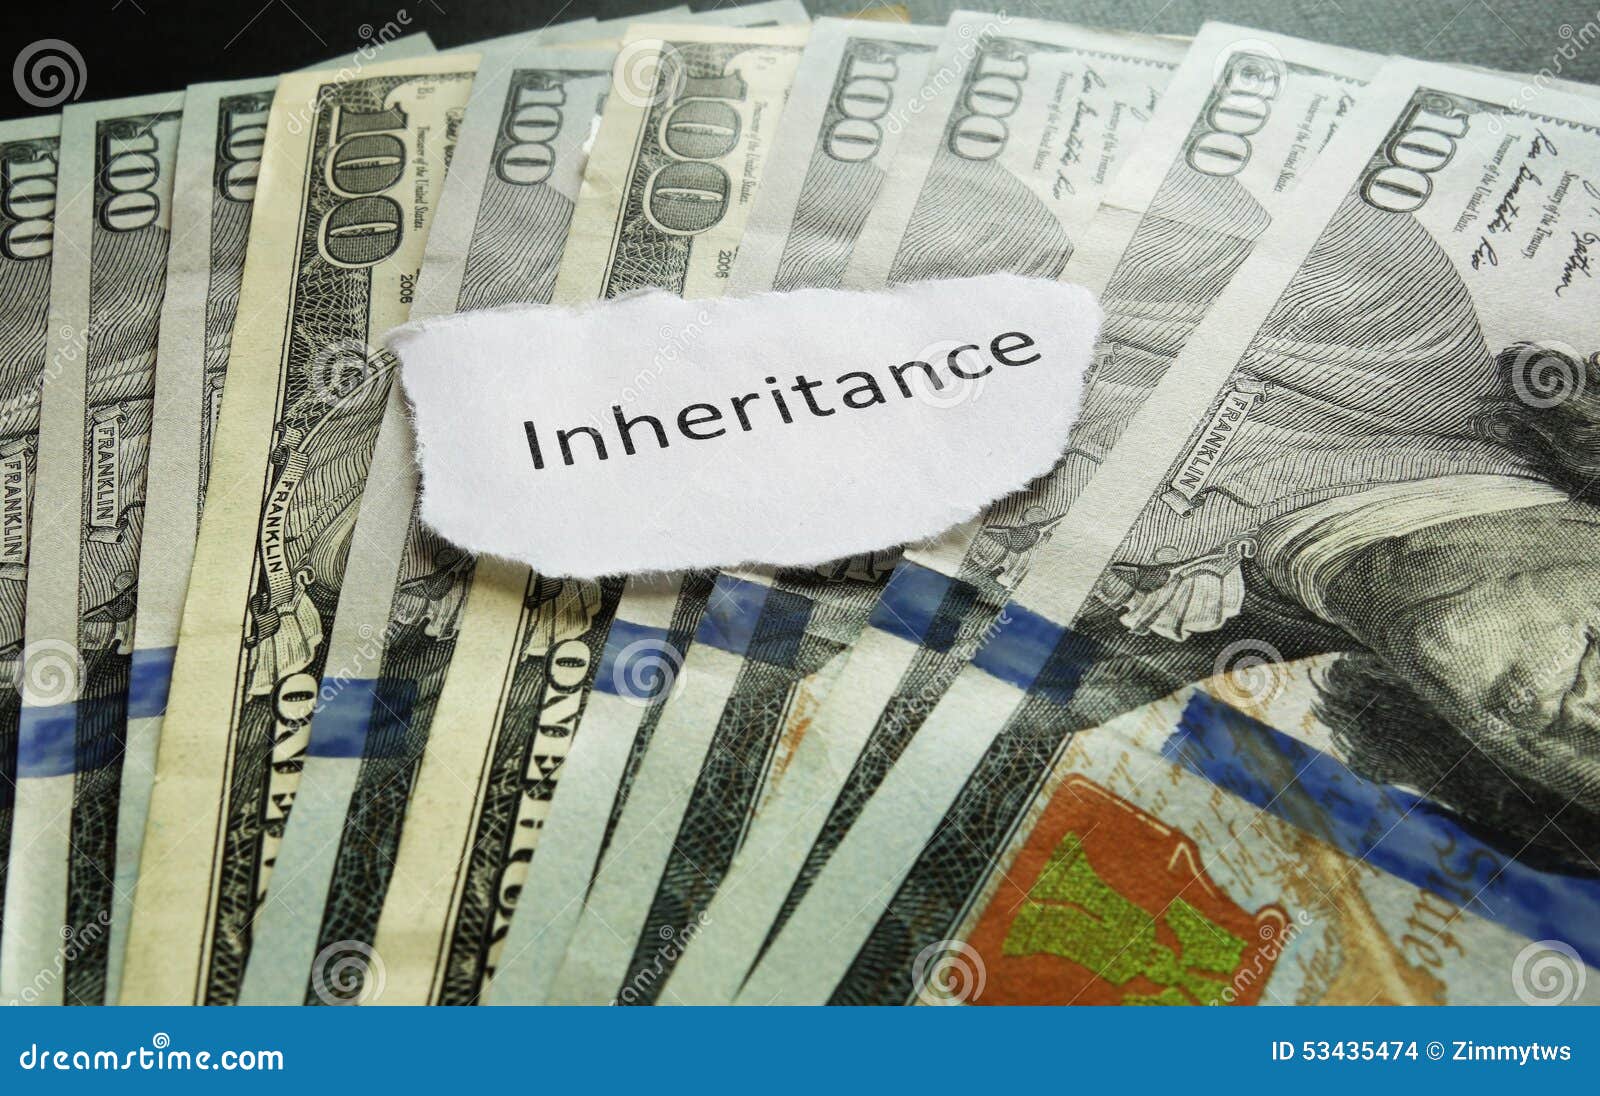 Inheritance note stock photo. Image of money, last, finance - 53435474